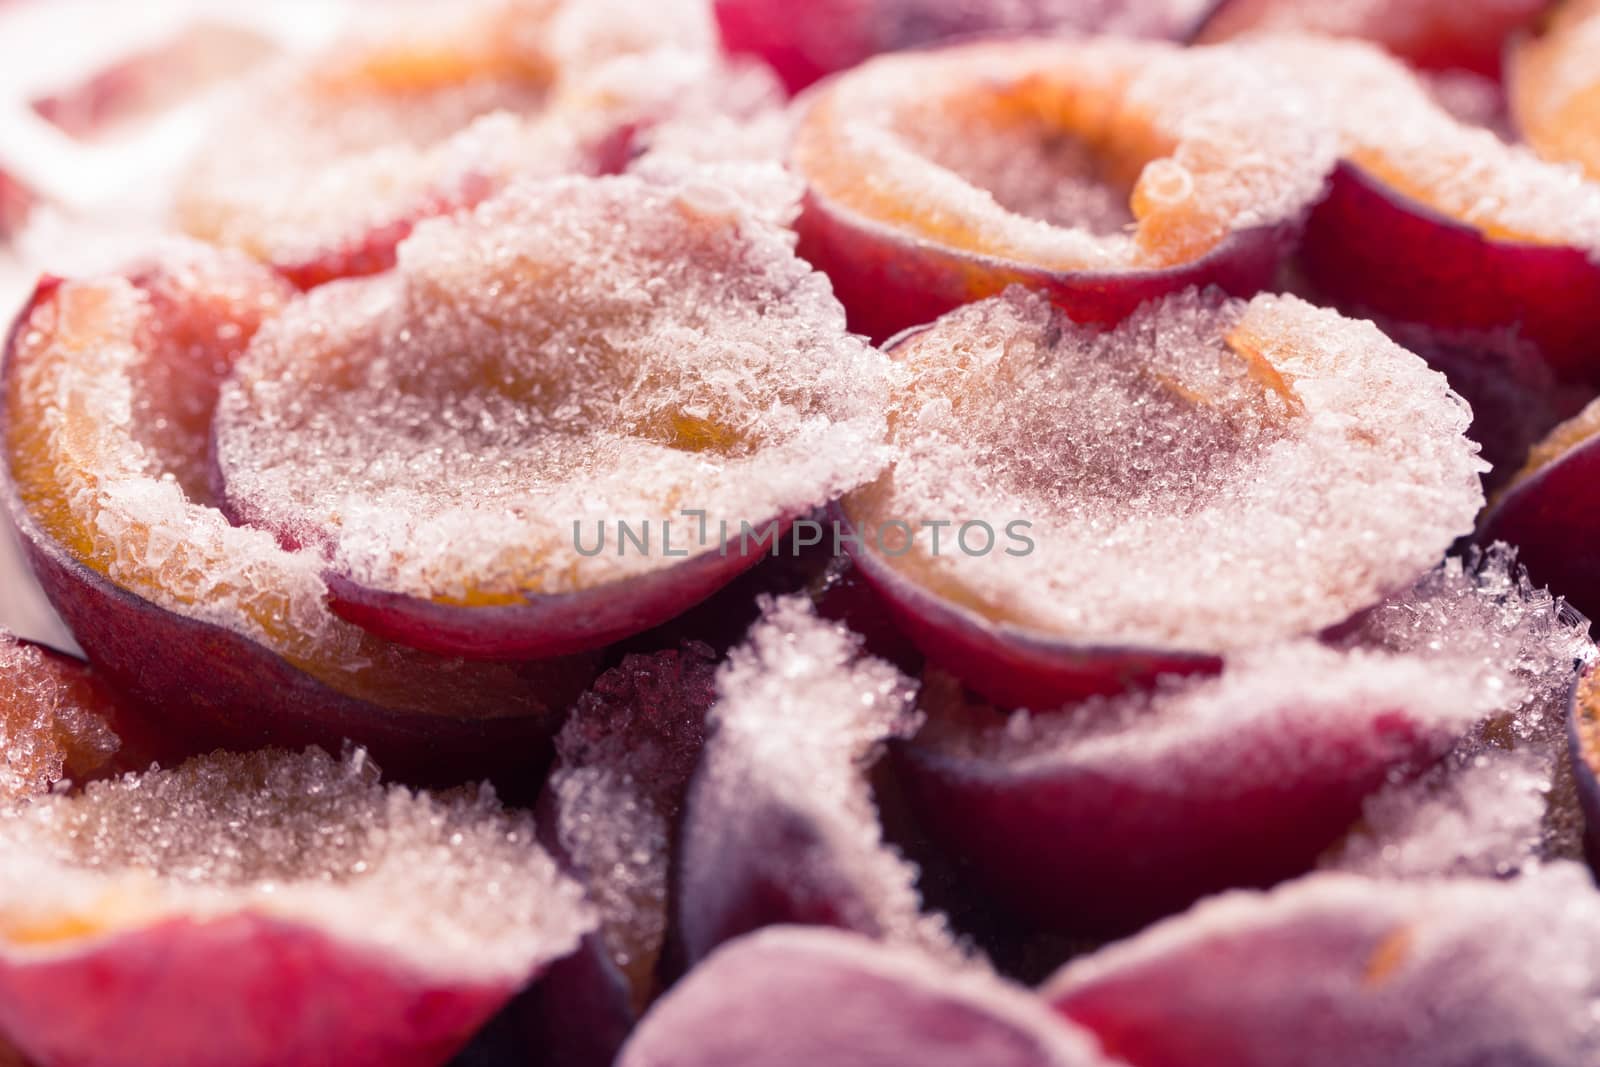 frozen half of a plum on a wooden background. Winter vitamins